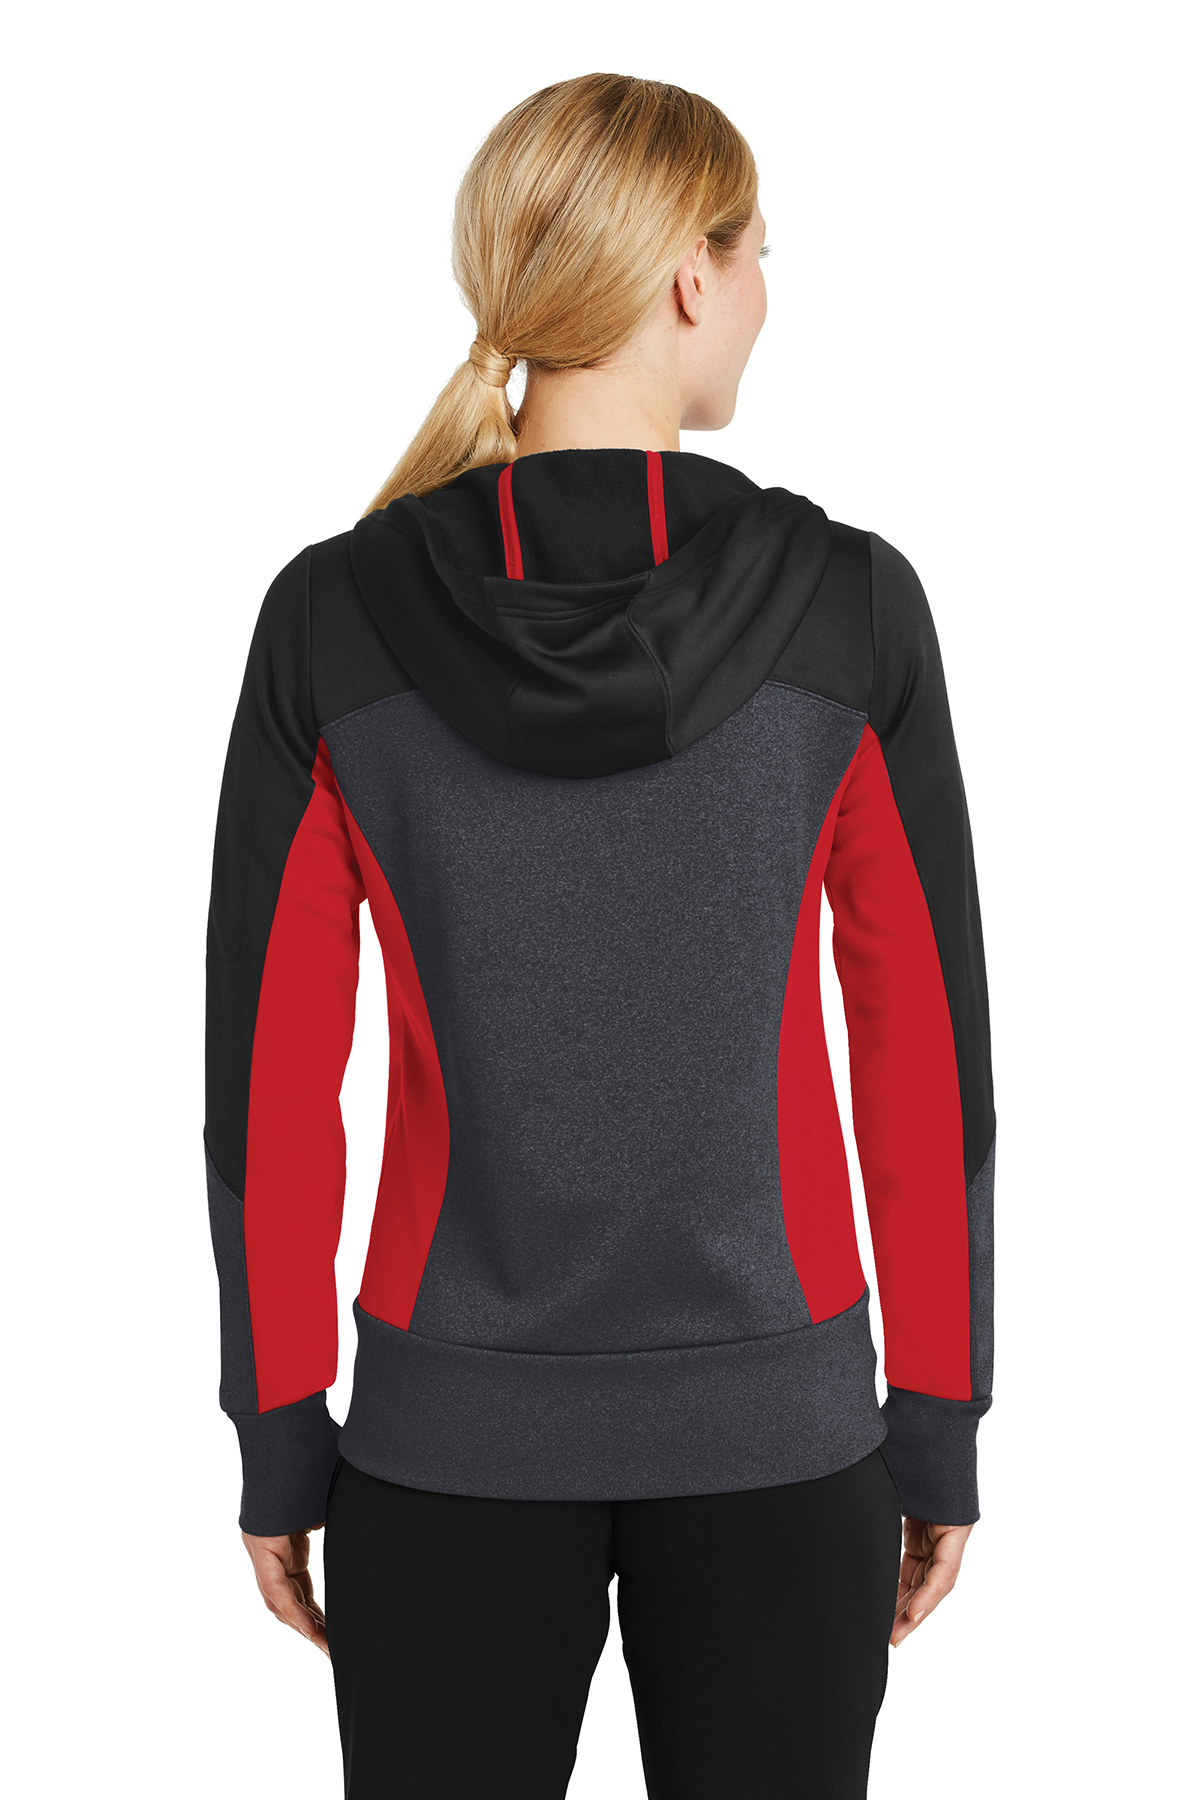 Shop Sport-Tek ST245 Full Zip Fleece Jacket at Wholesale Prices